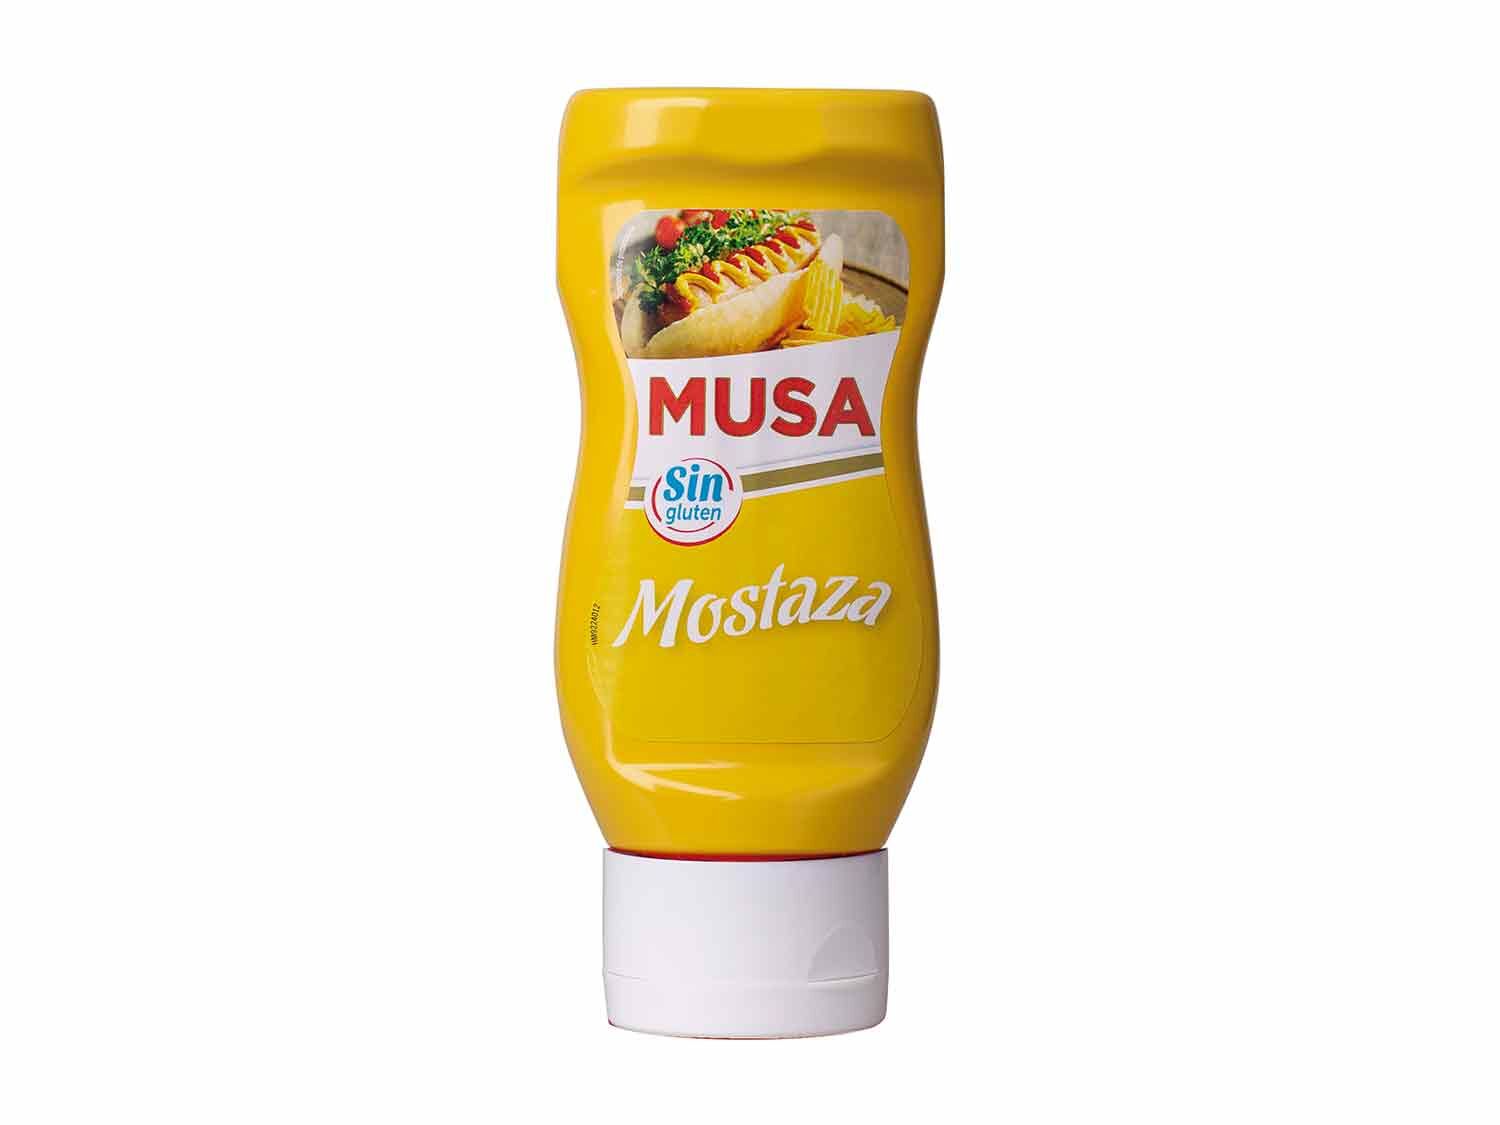 Musa® Mostaza